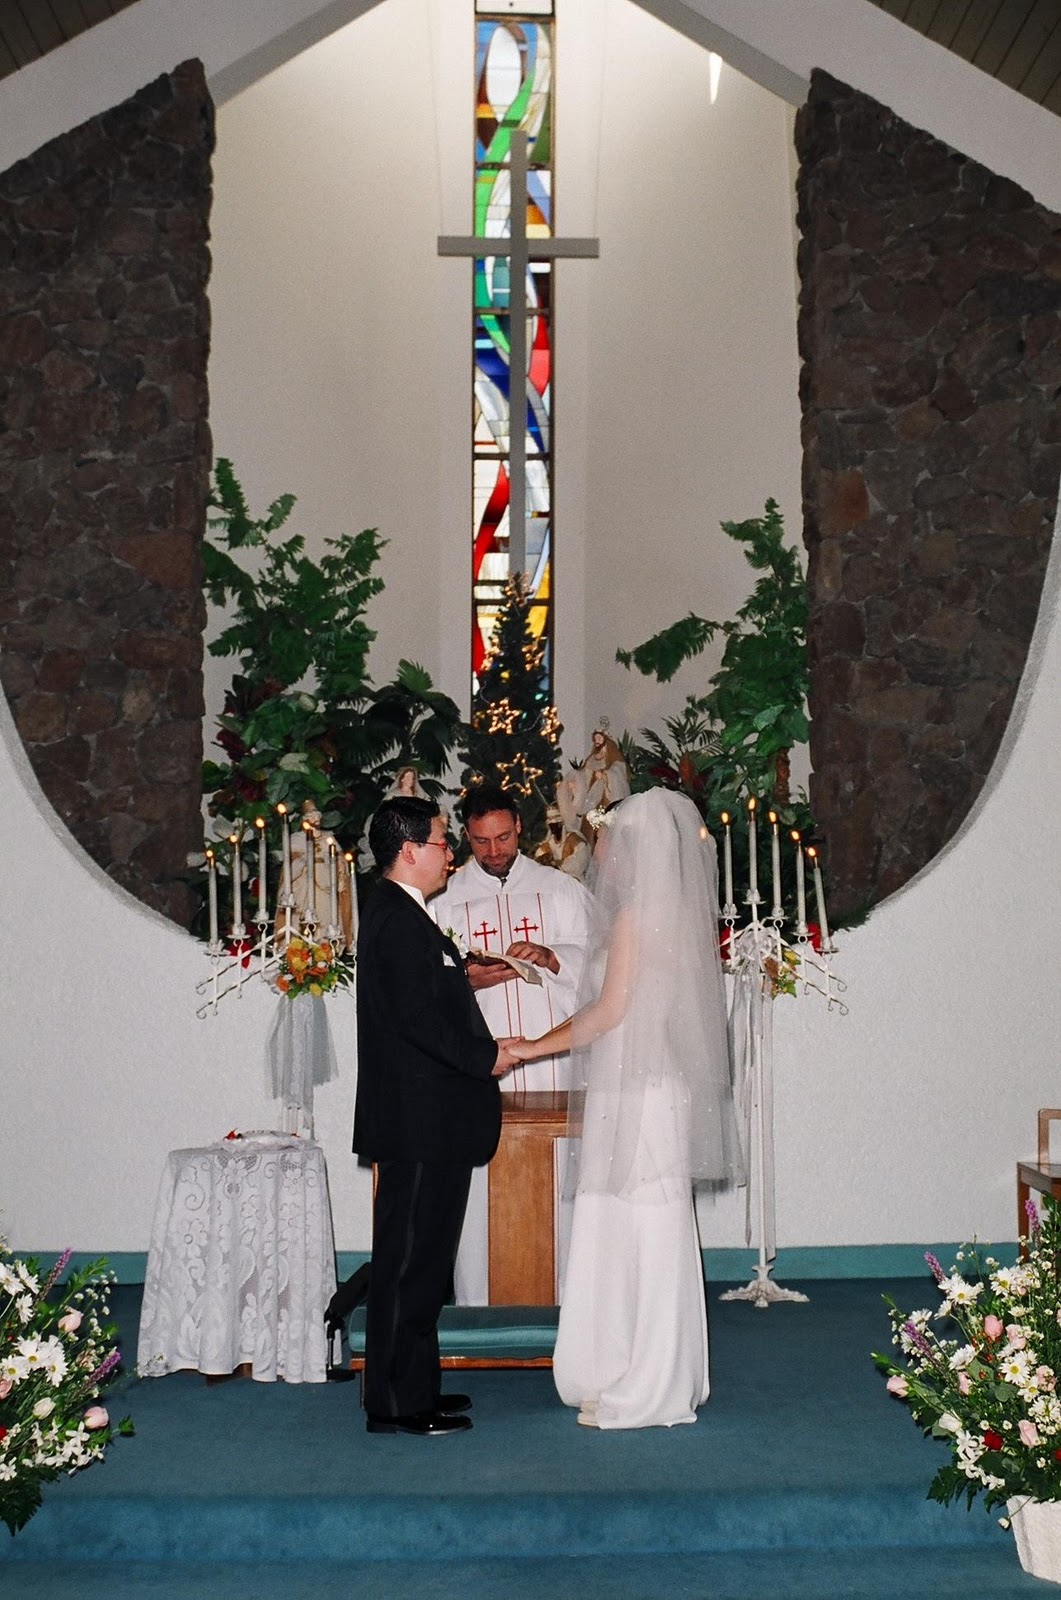 Wedding-Chapels.org - Find a